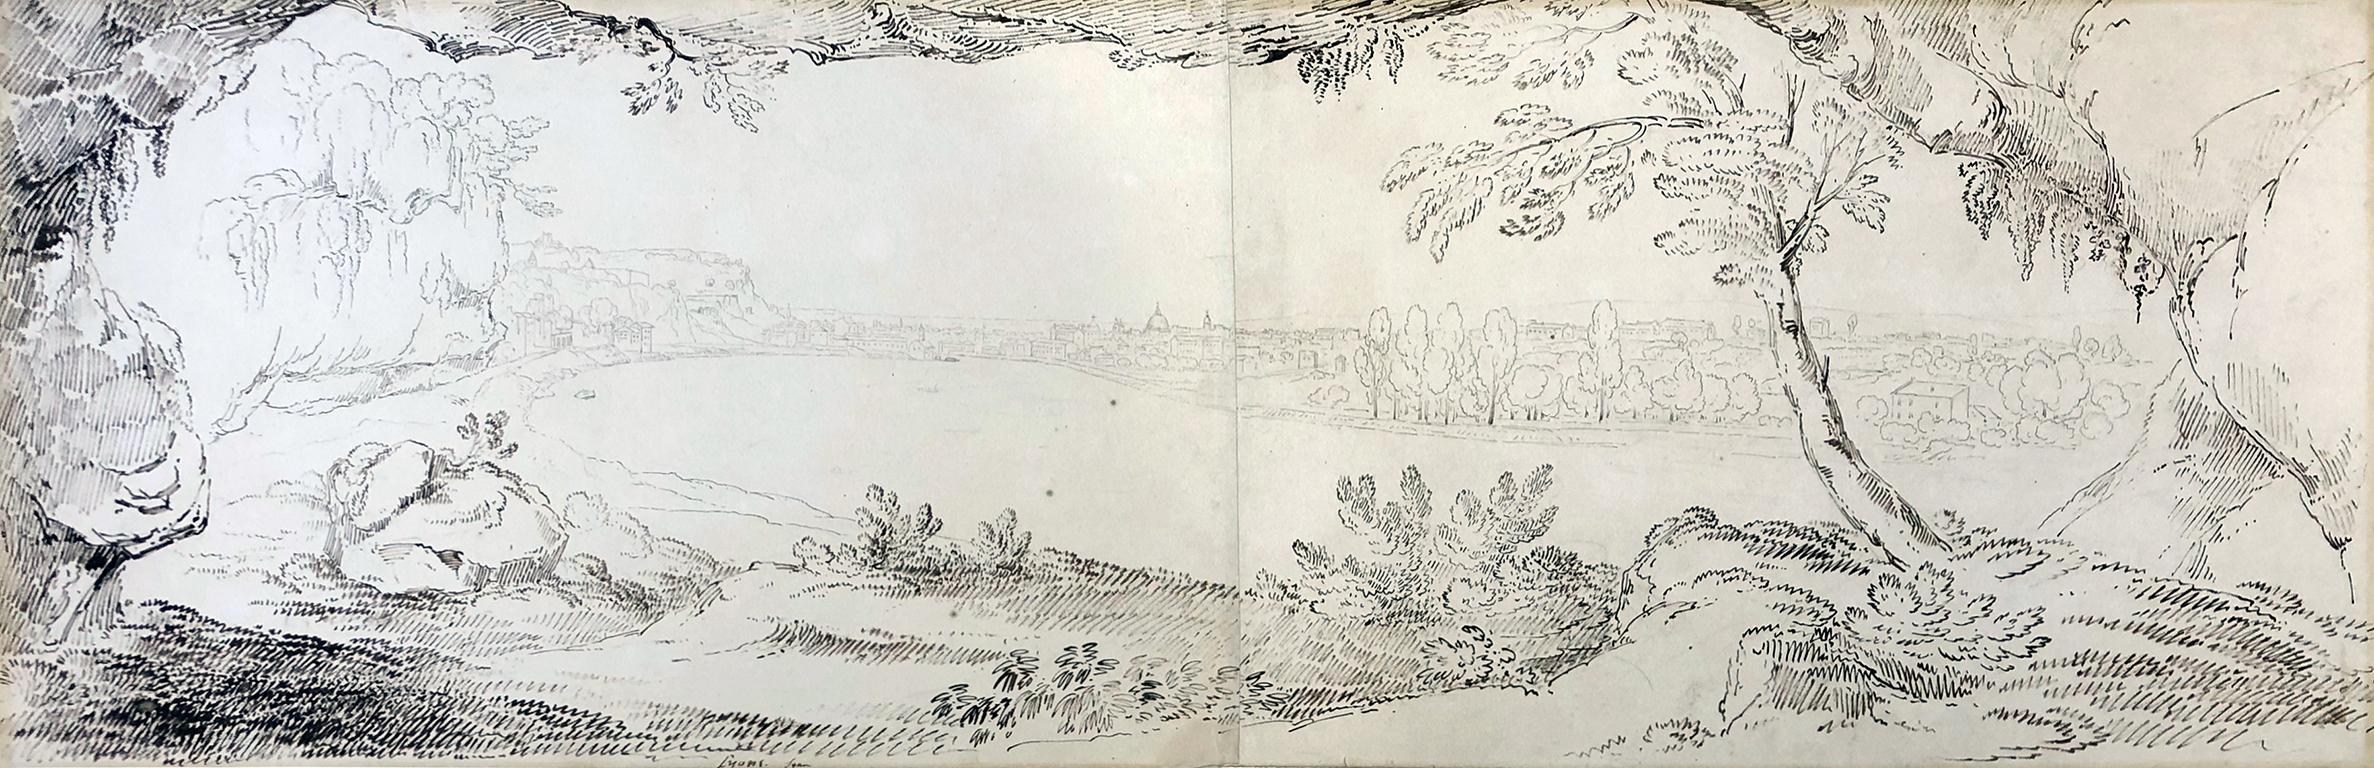 Hugh William Williams Landscape Art - View of Lyon - Hugh William "Grecian" Williams (Scottish 1773-1829)